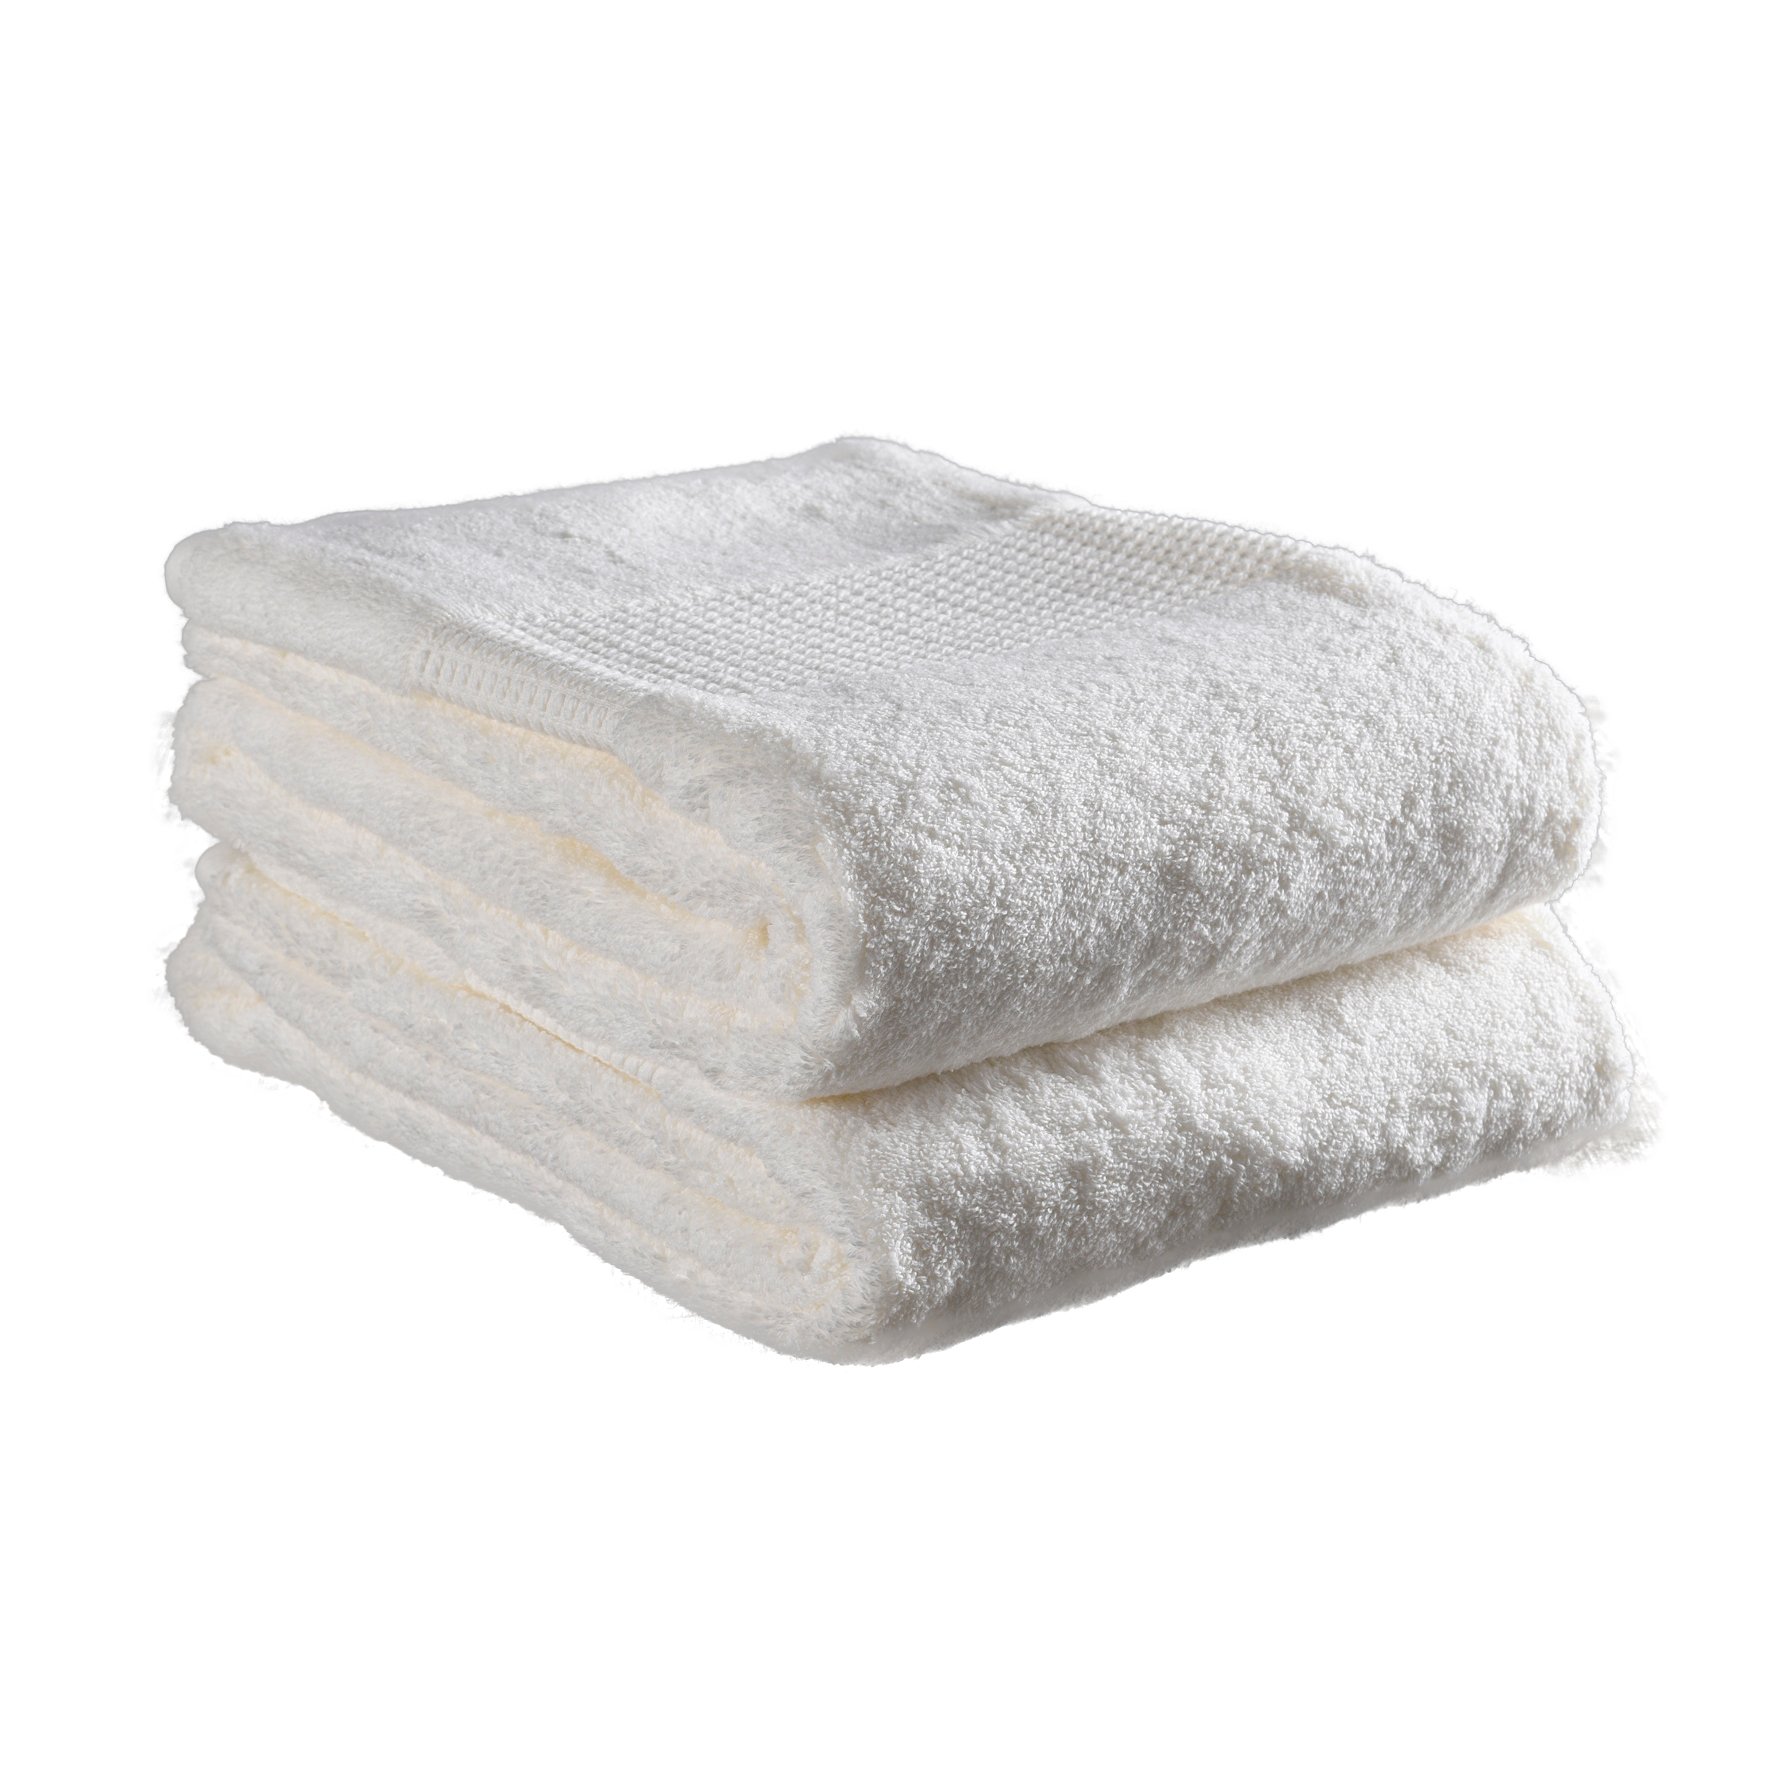 Delilah Home DHT-100200 White Organic Cotton Towel Set - Twin